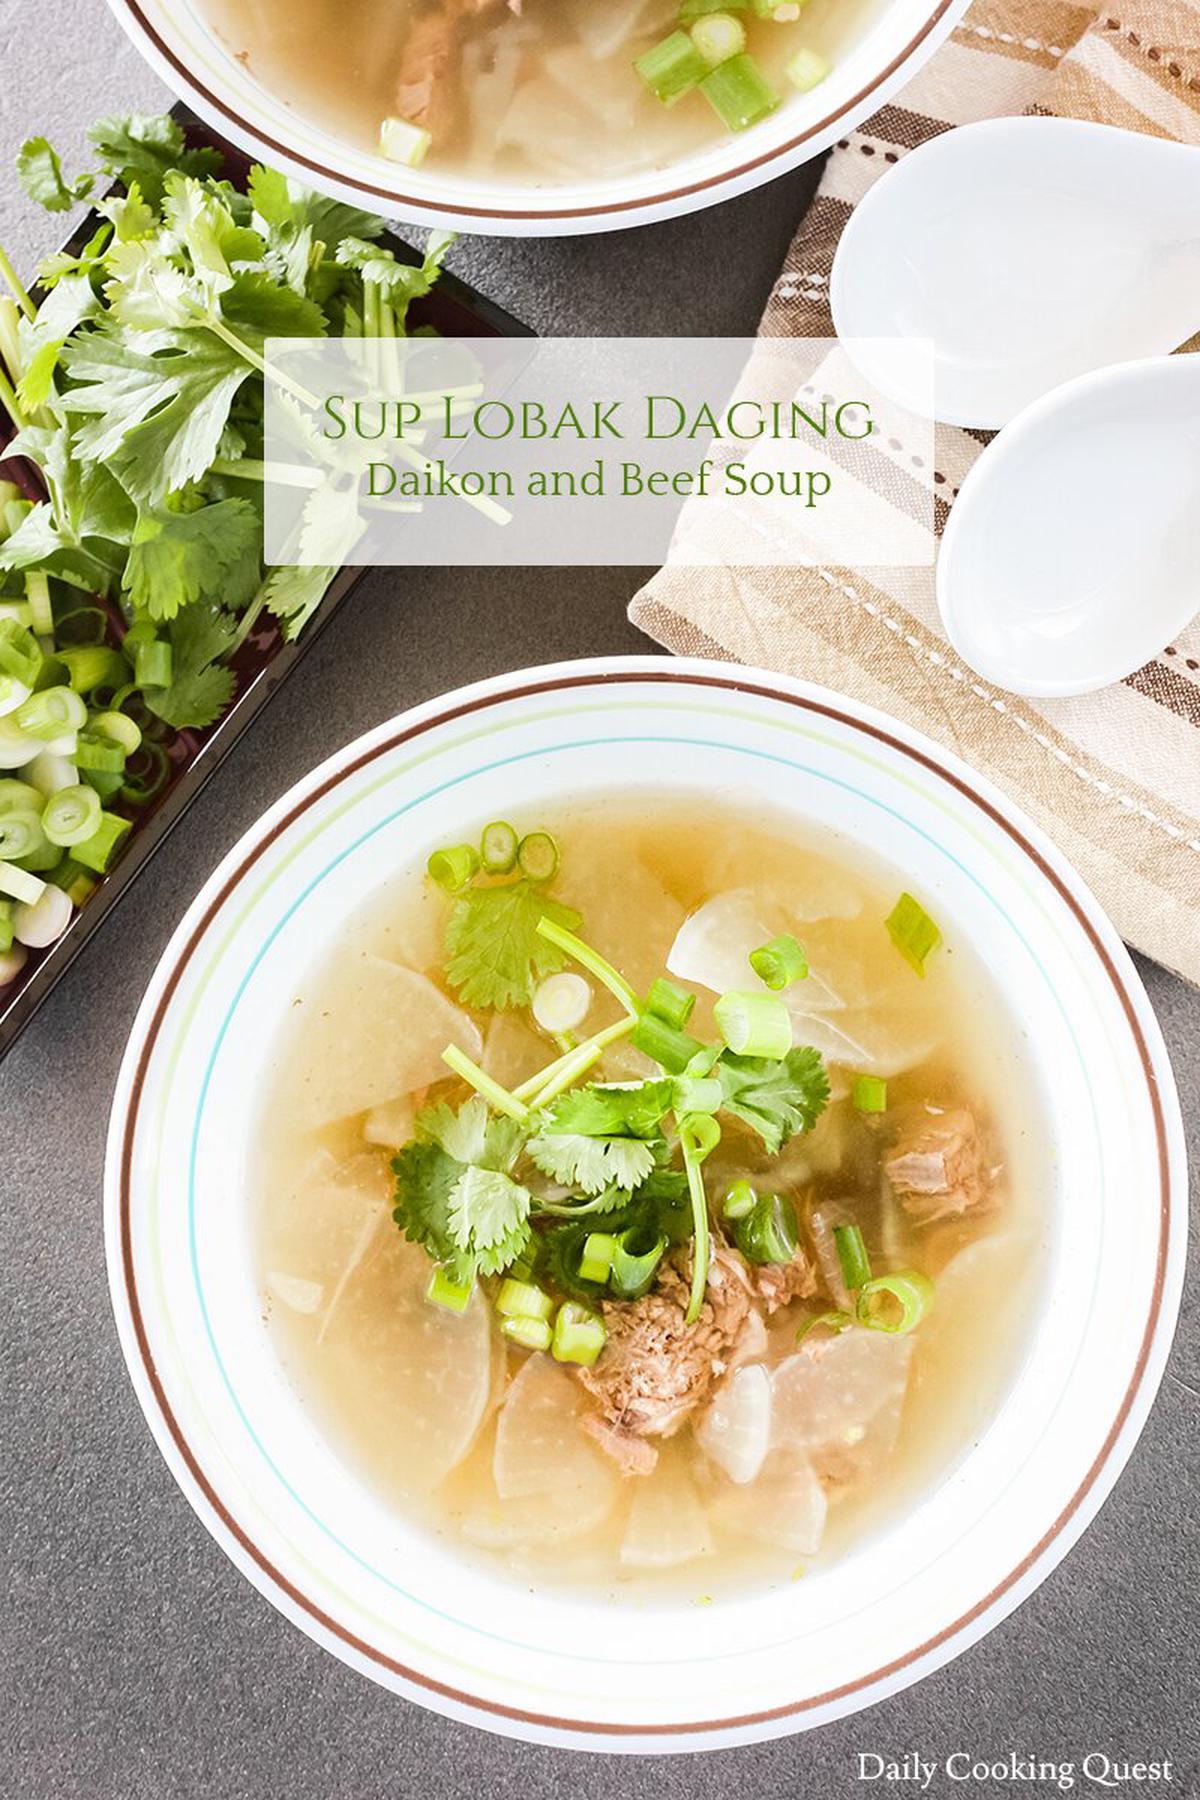 Sup Lobak Daging - Daikon and Beef Soup